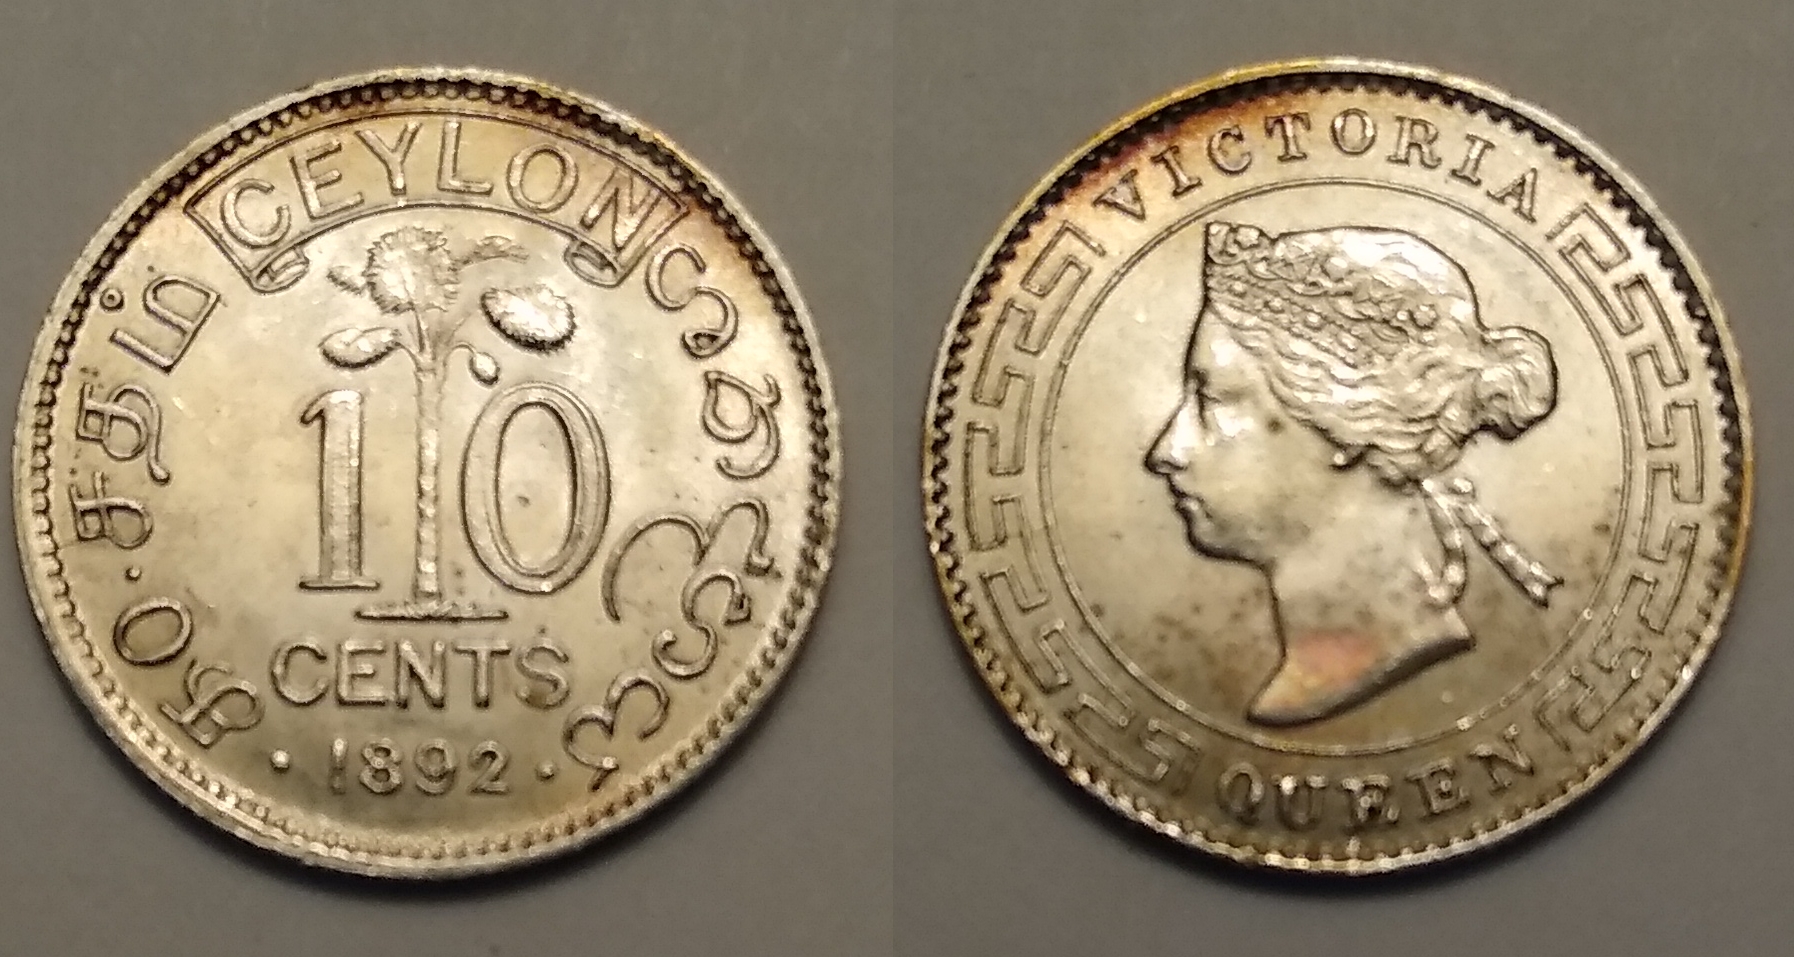 1892 ceylon 10 cents.jpg